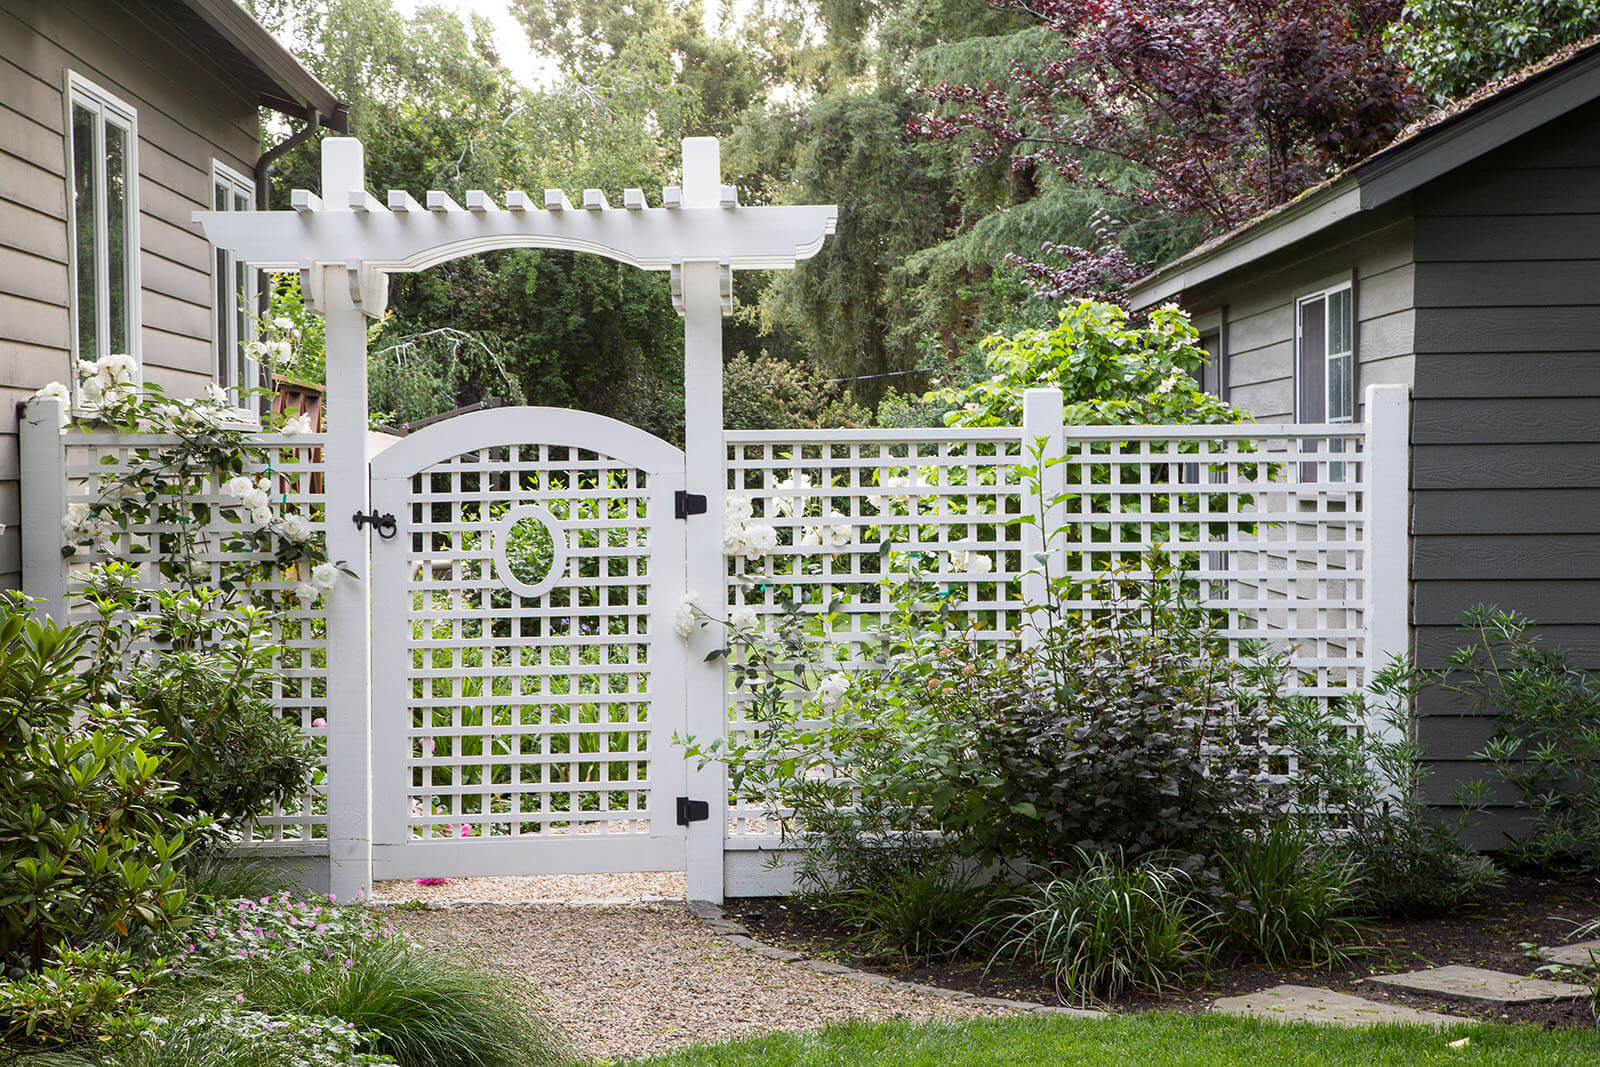 Custom gate with arbor and lattice, with gravel path through garden